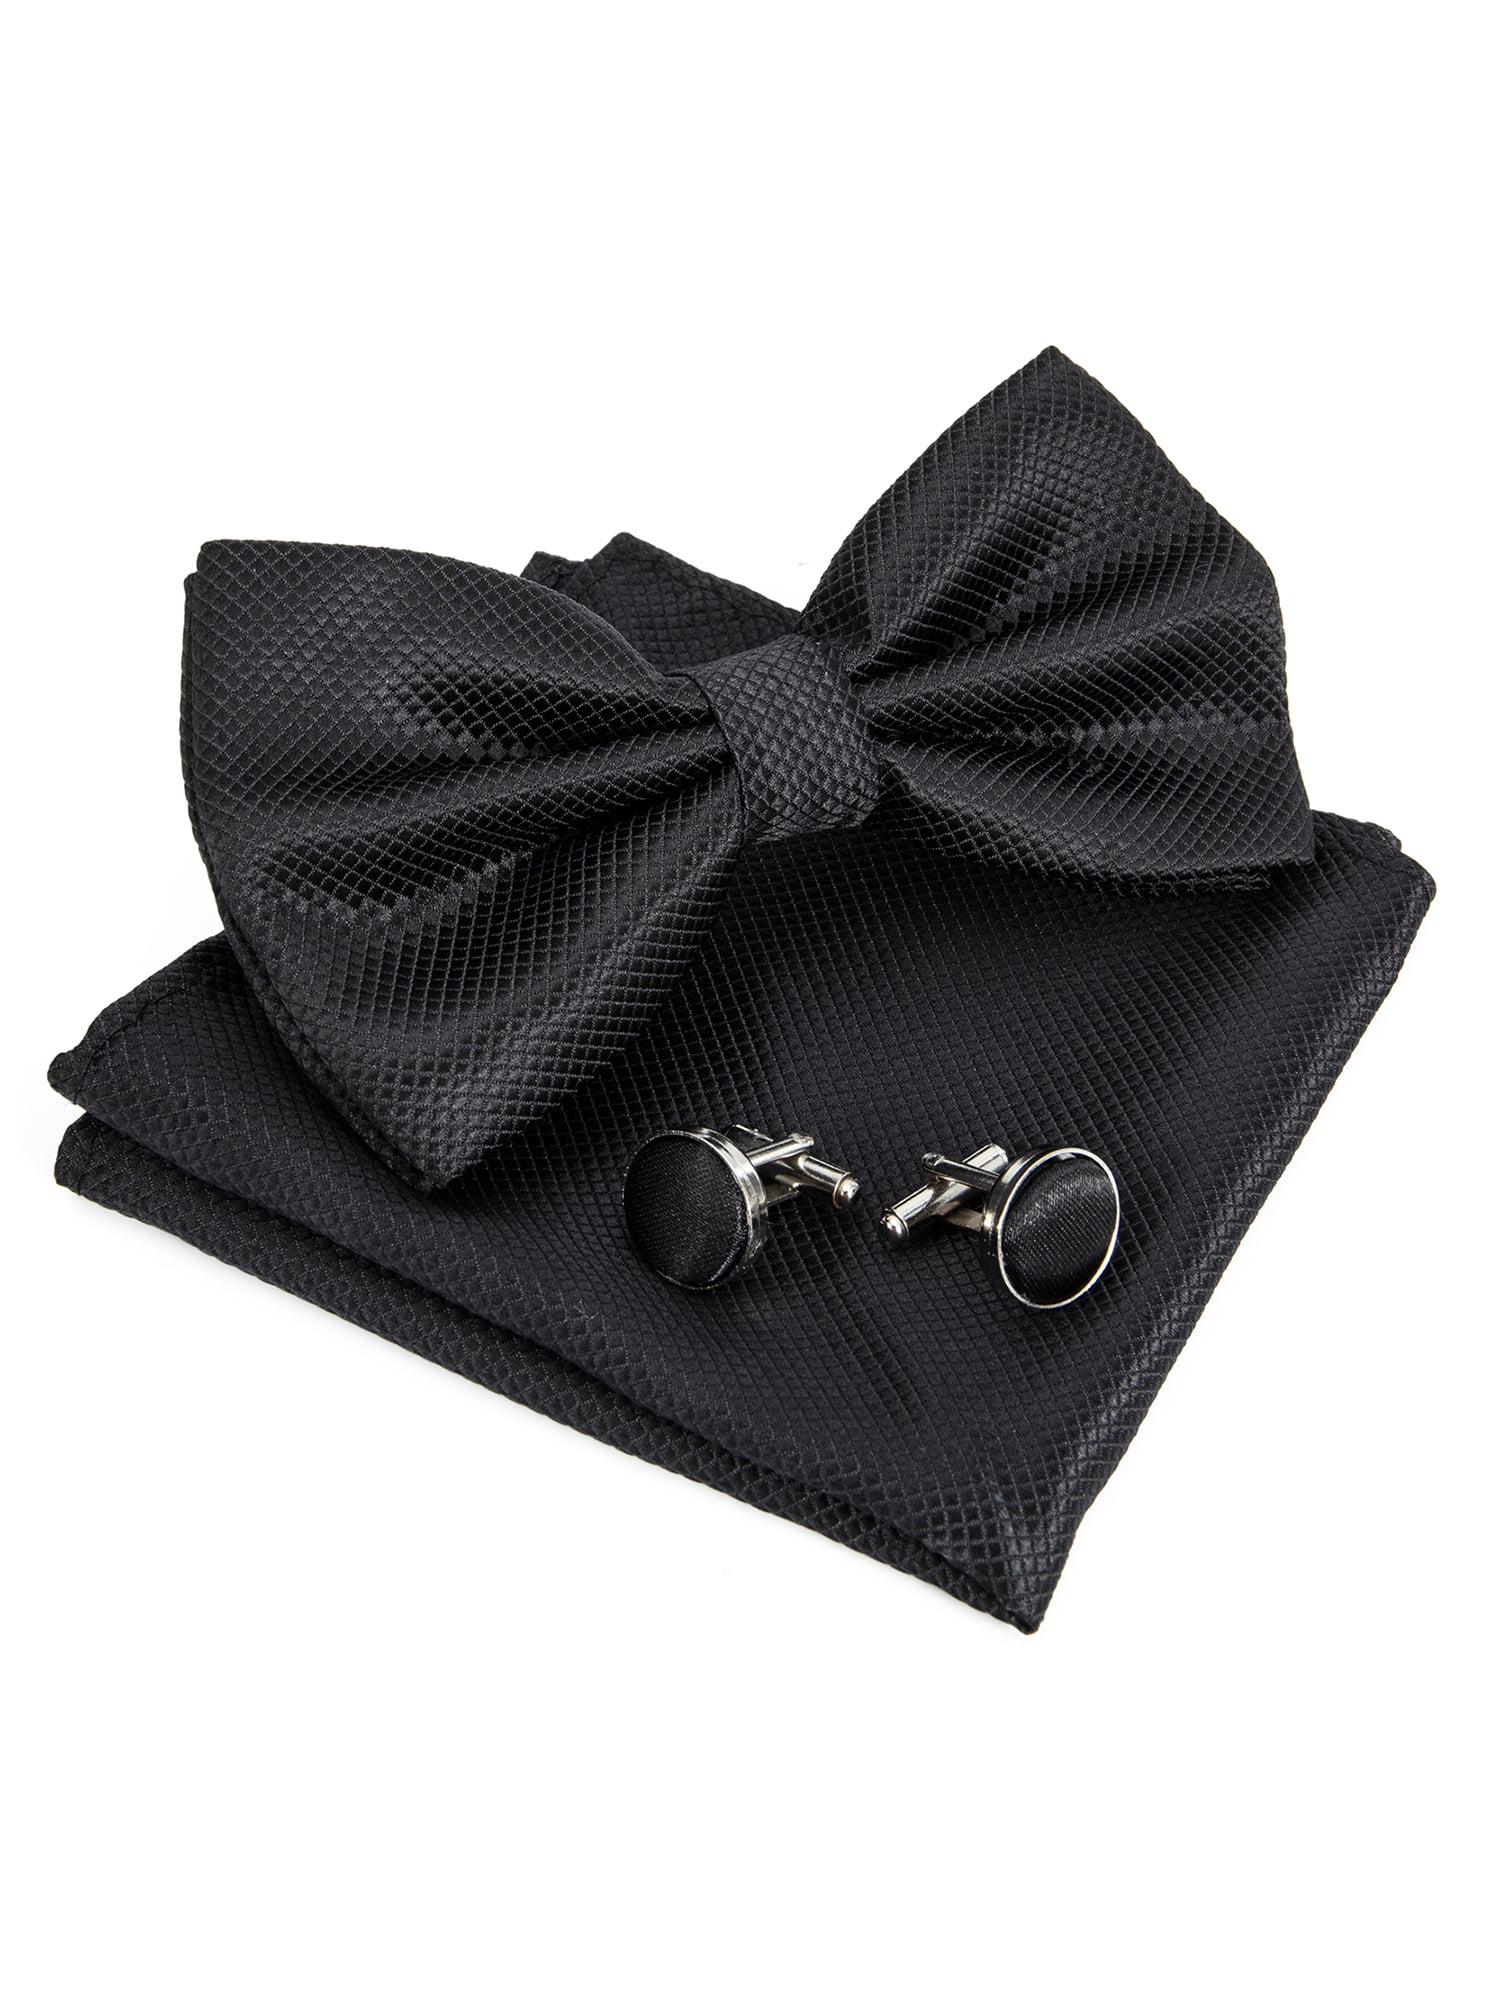 Details about   New Men's micro fiber Pre-tied Bow tie & hankie dark gray purple paisley formal